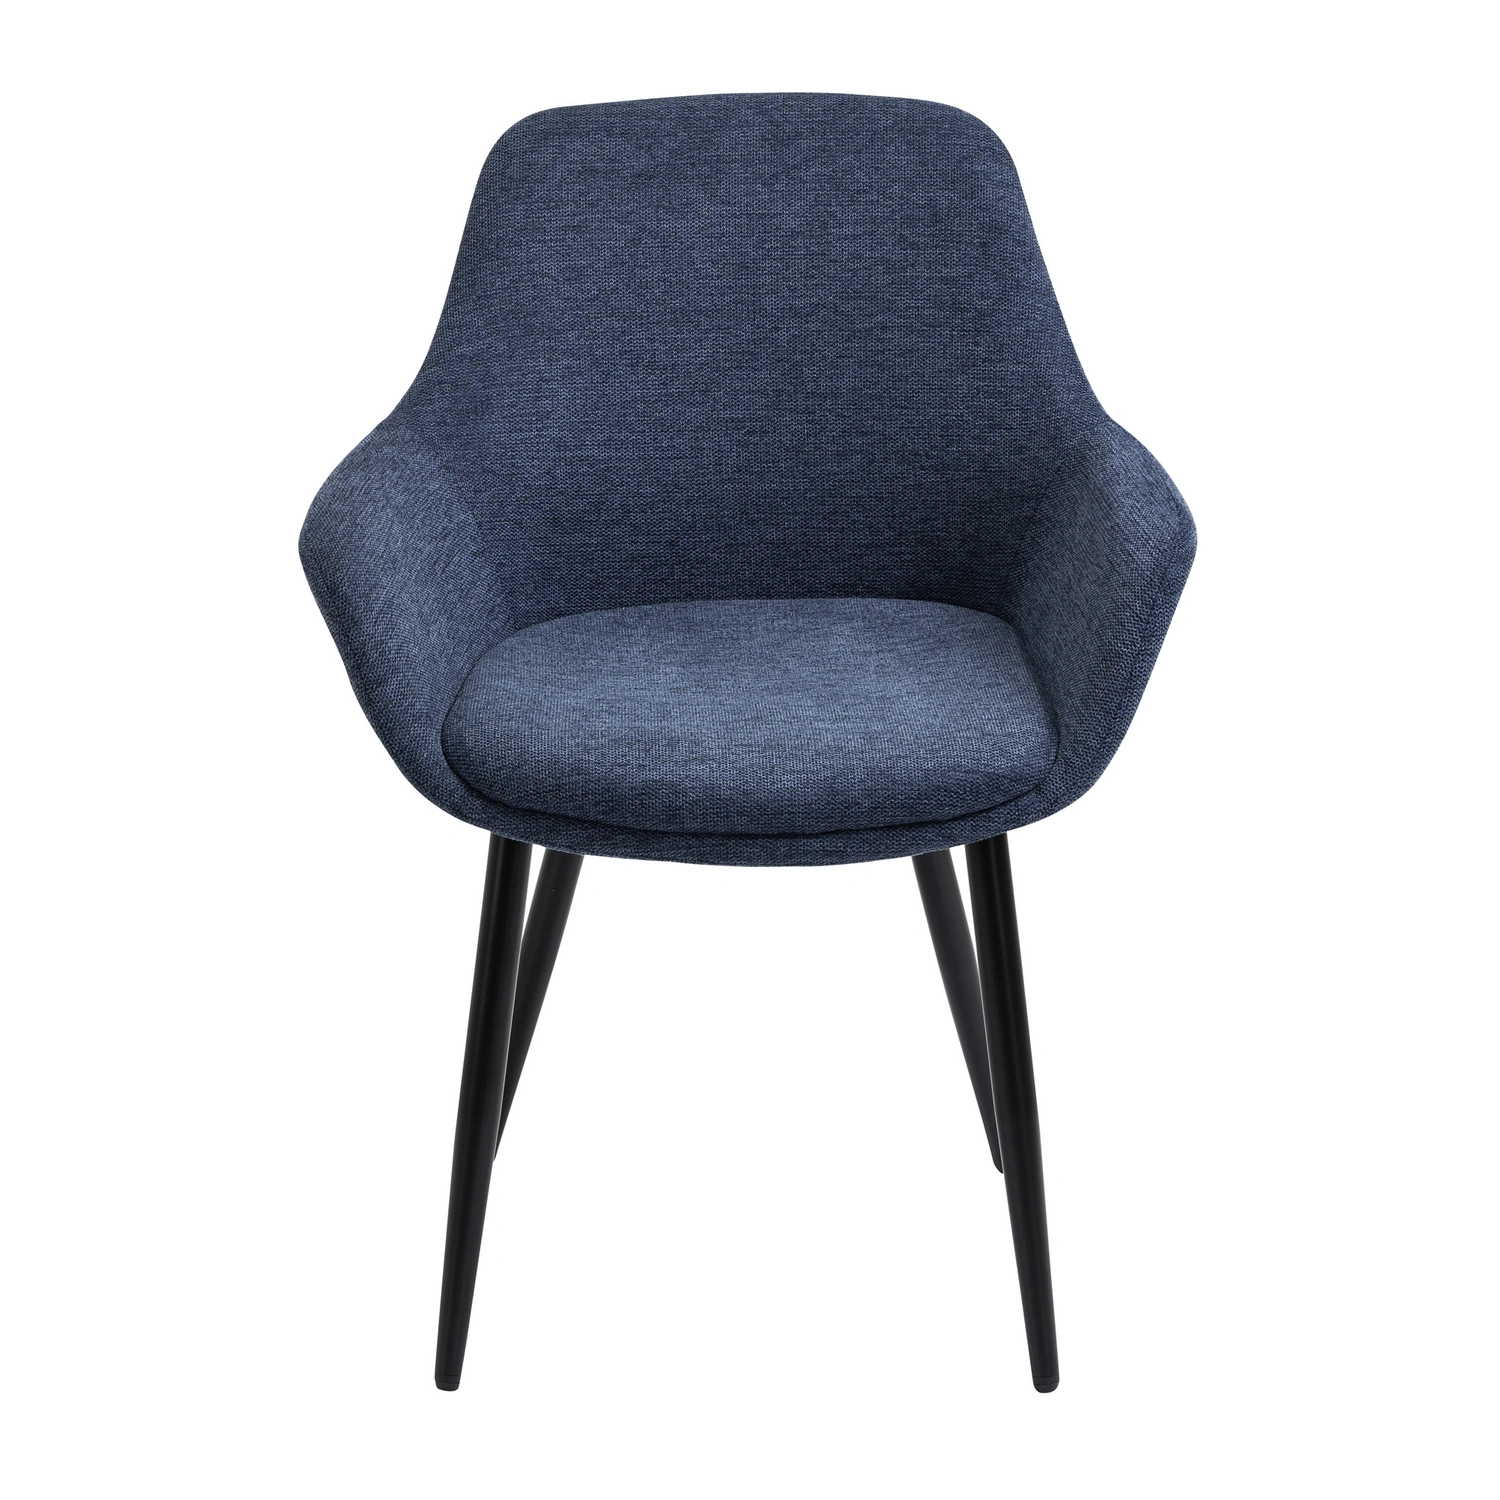 SalesFever Stuhl, Höhe: 86 cm, dunkelblau/schwarz, 2 stk